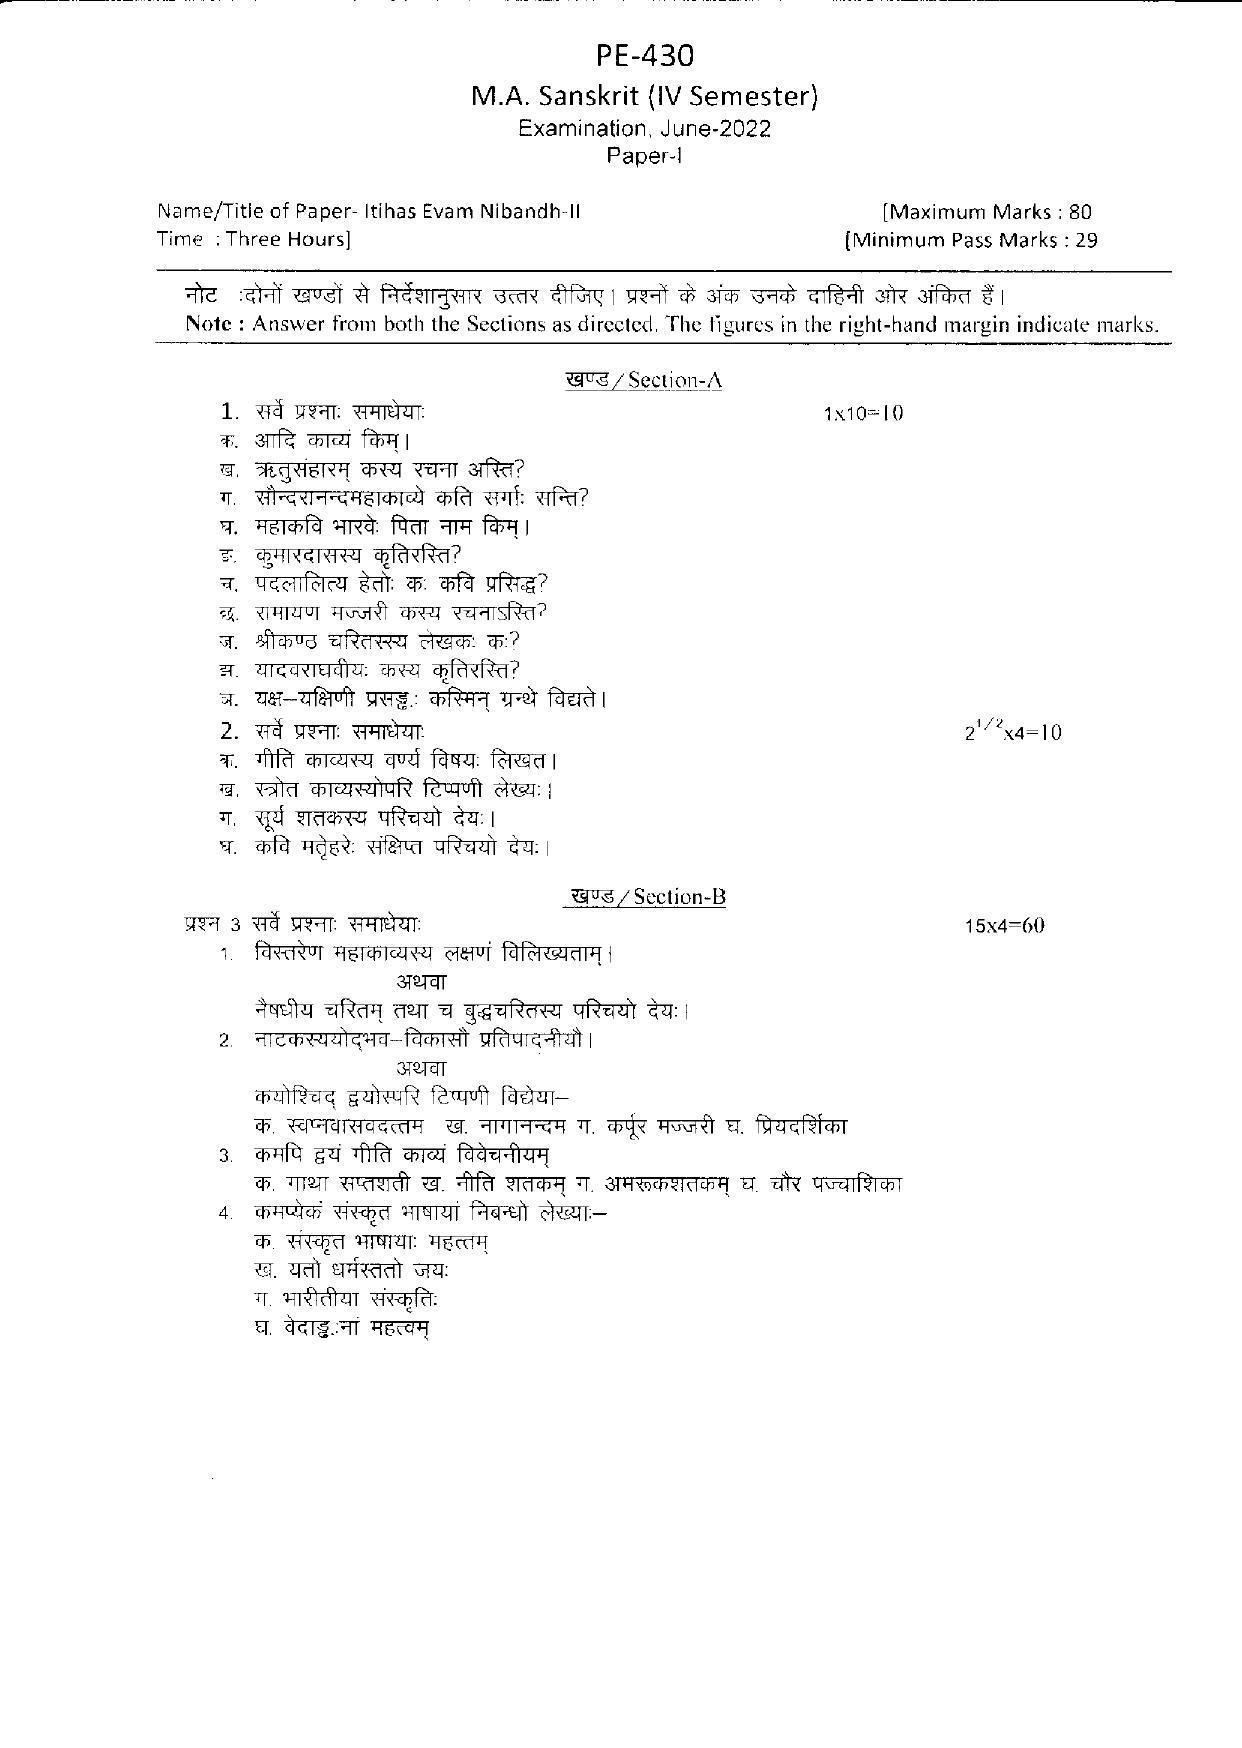 Bilaspur University Question Paper June 2022:M.A. Sanskrit (Fourth Semester) Itihas Evam Nibandh-II Paper 1 - Page 1